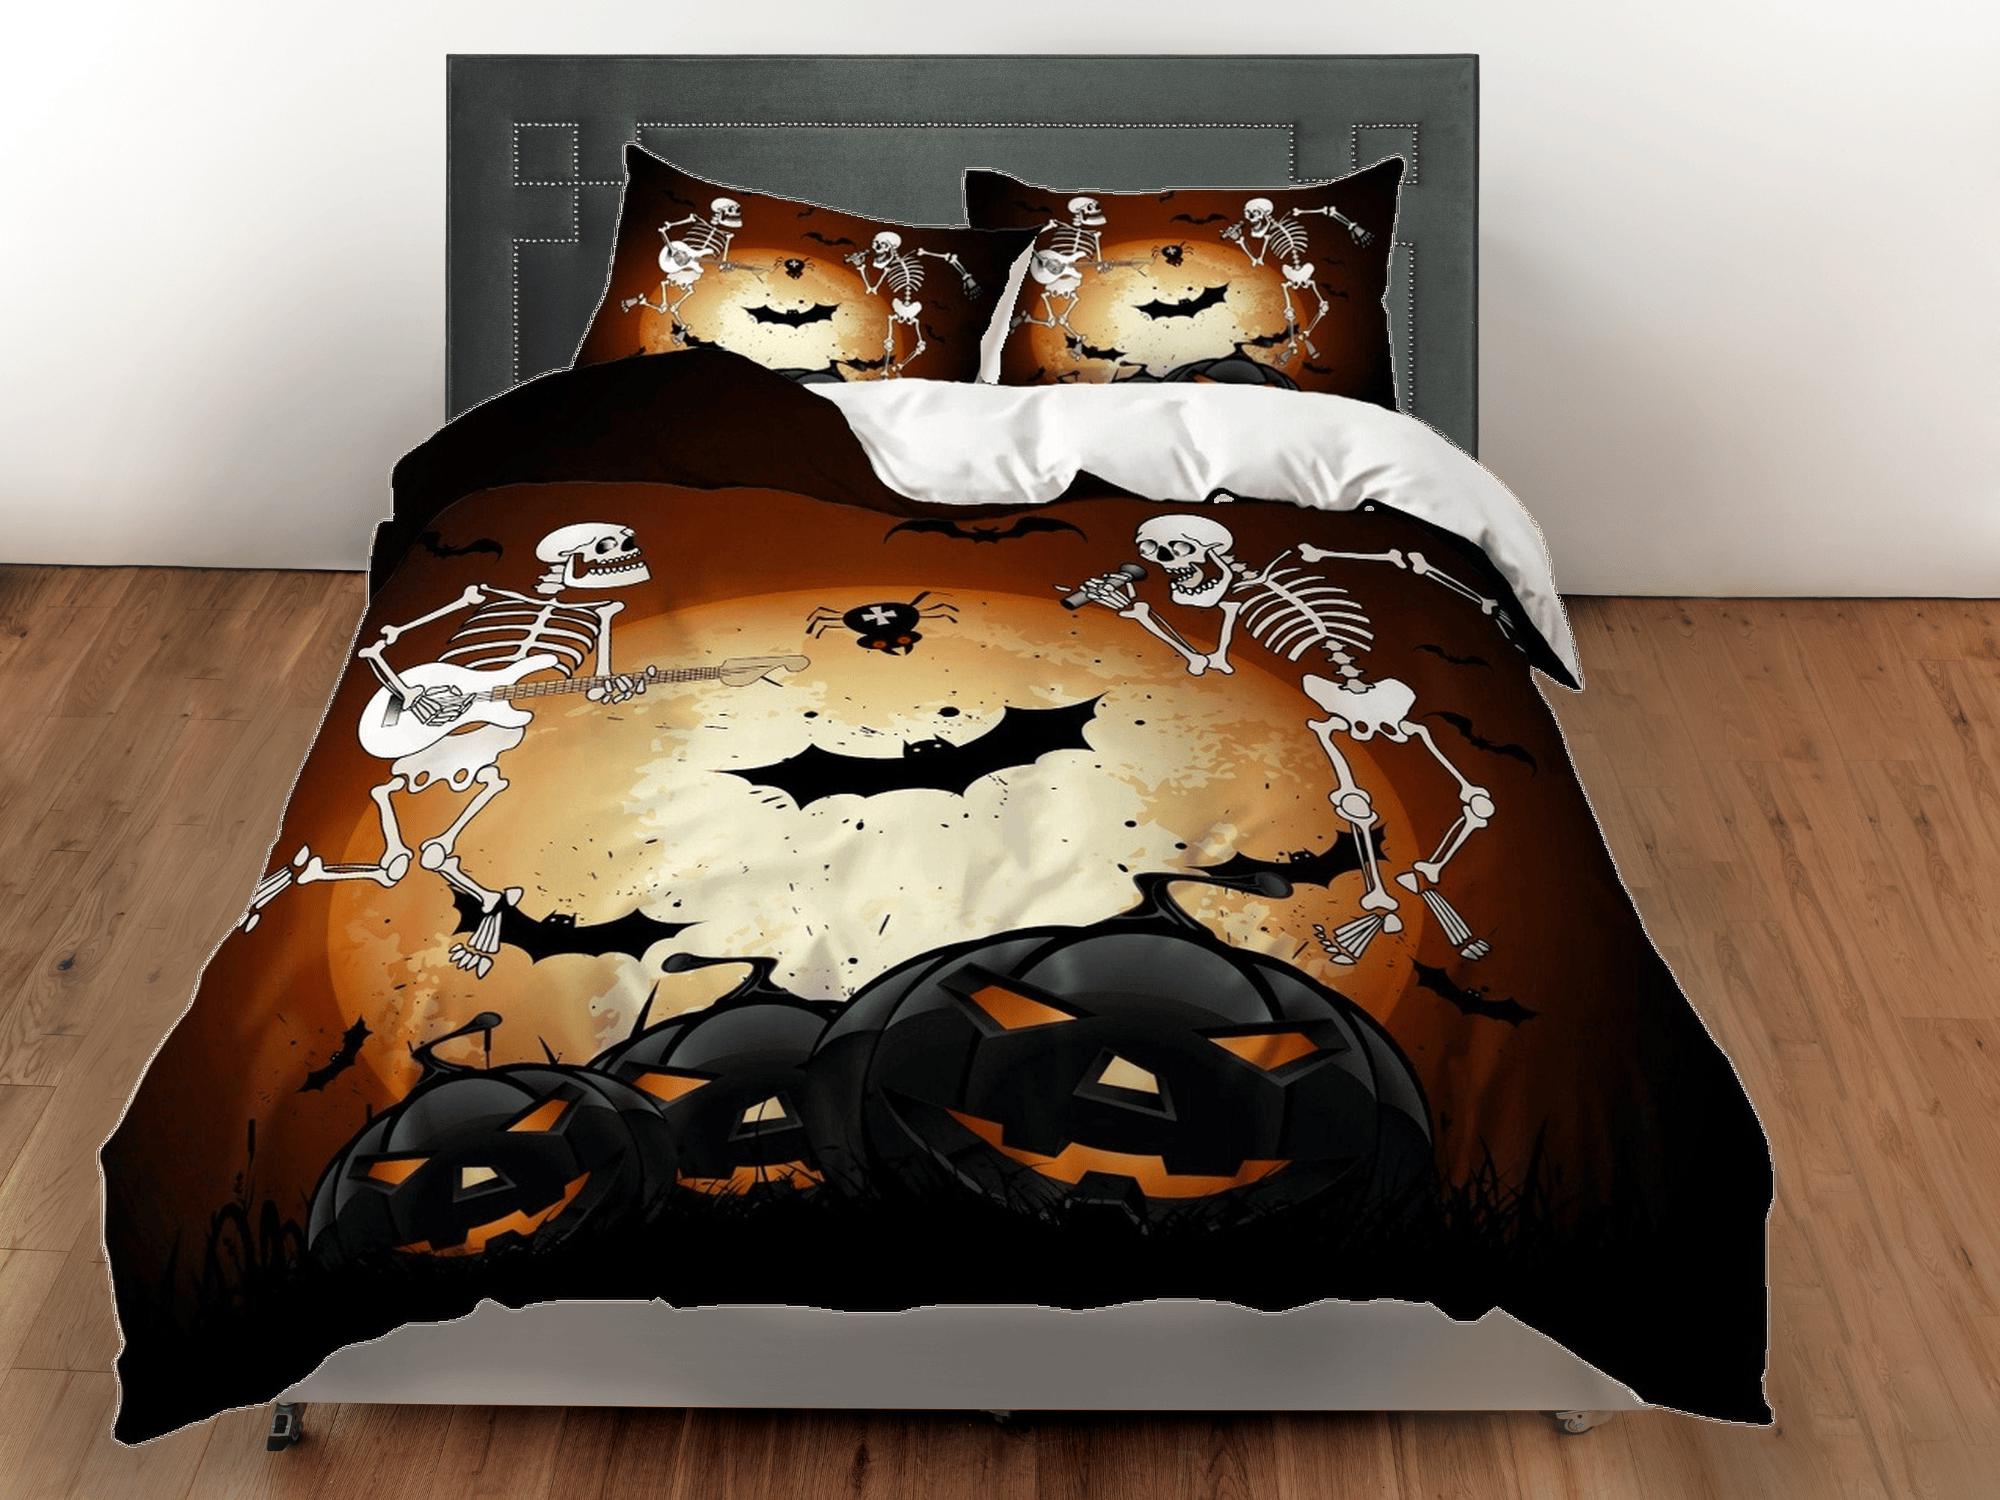 daintyduvet Skeleton and pumpkin halloween bedding & pillowcase, brown duvet cover set dorm bedding, halloween gift, nursery toddler bedding